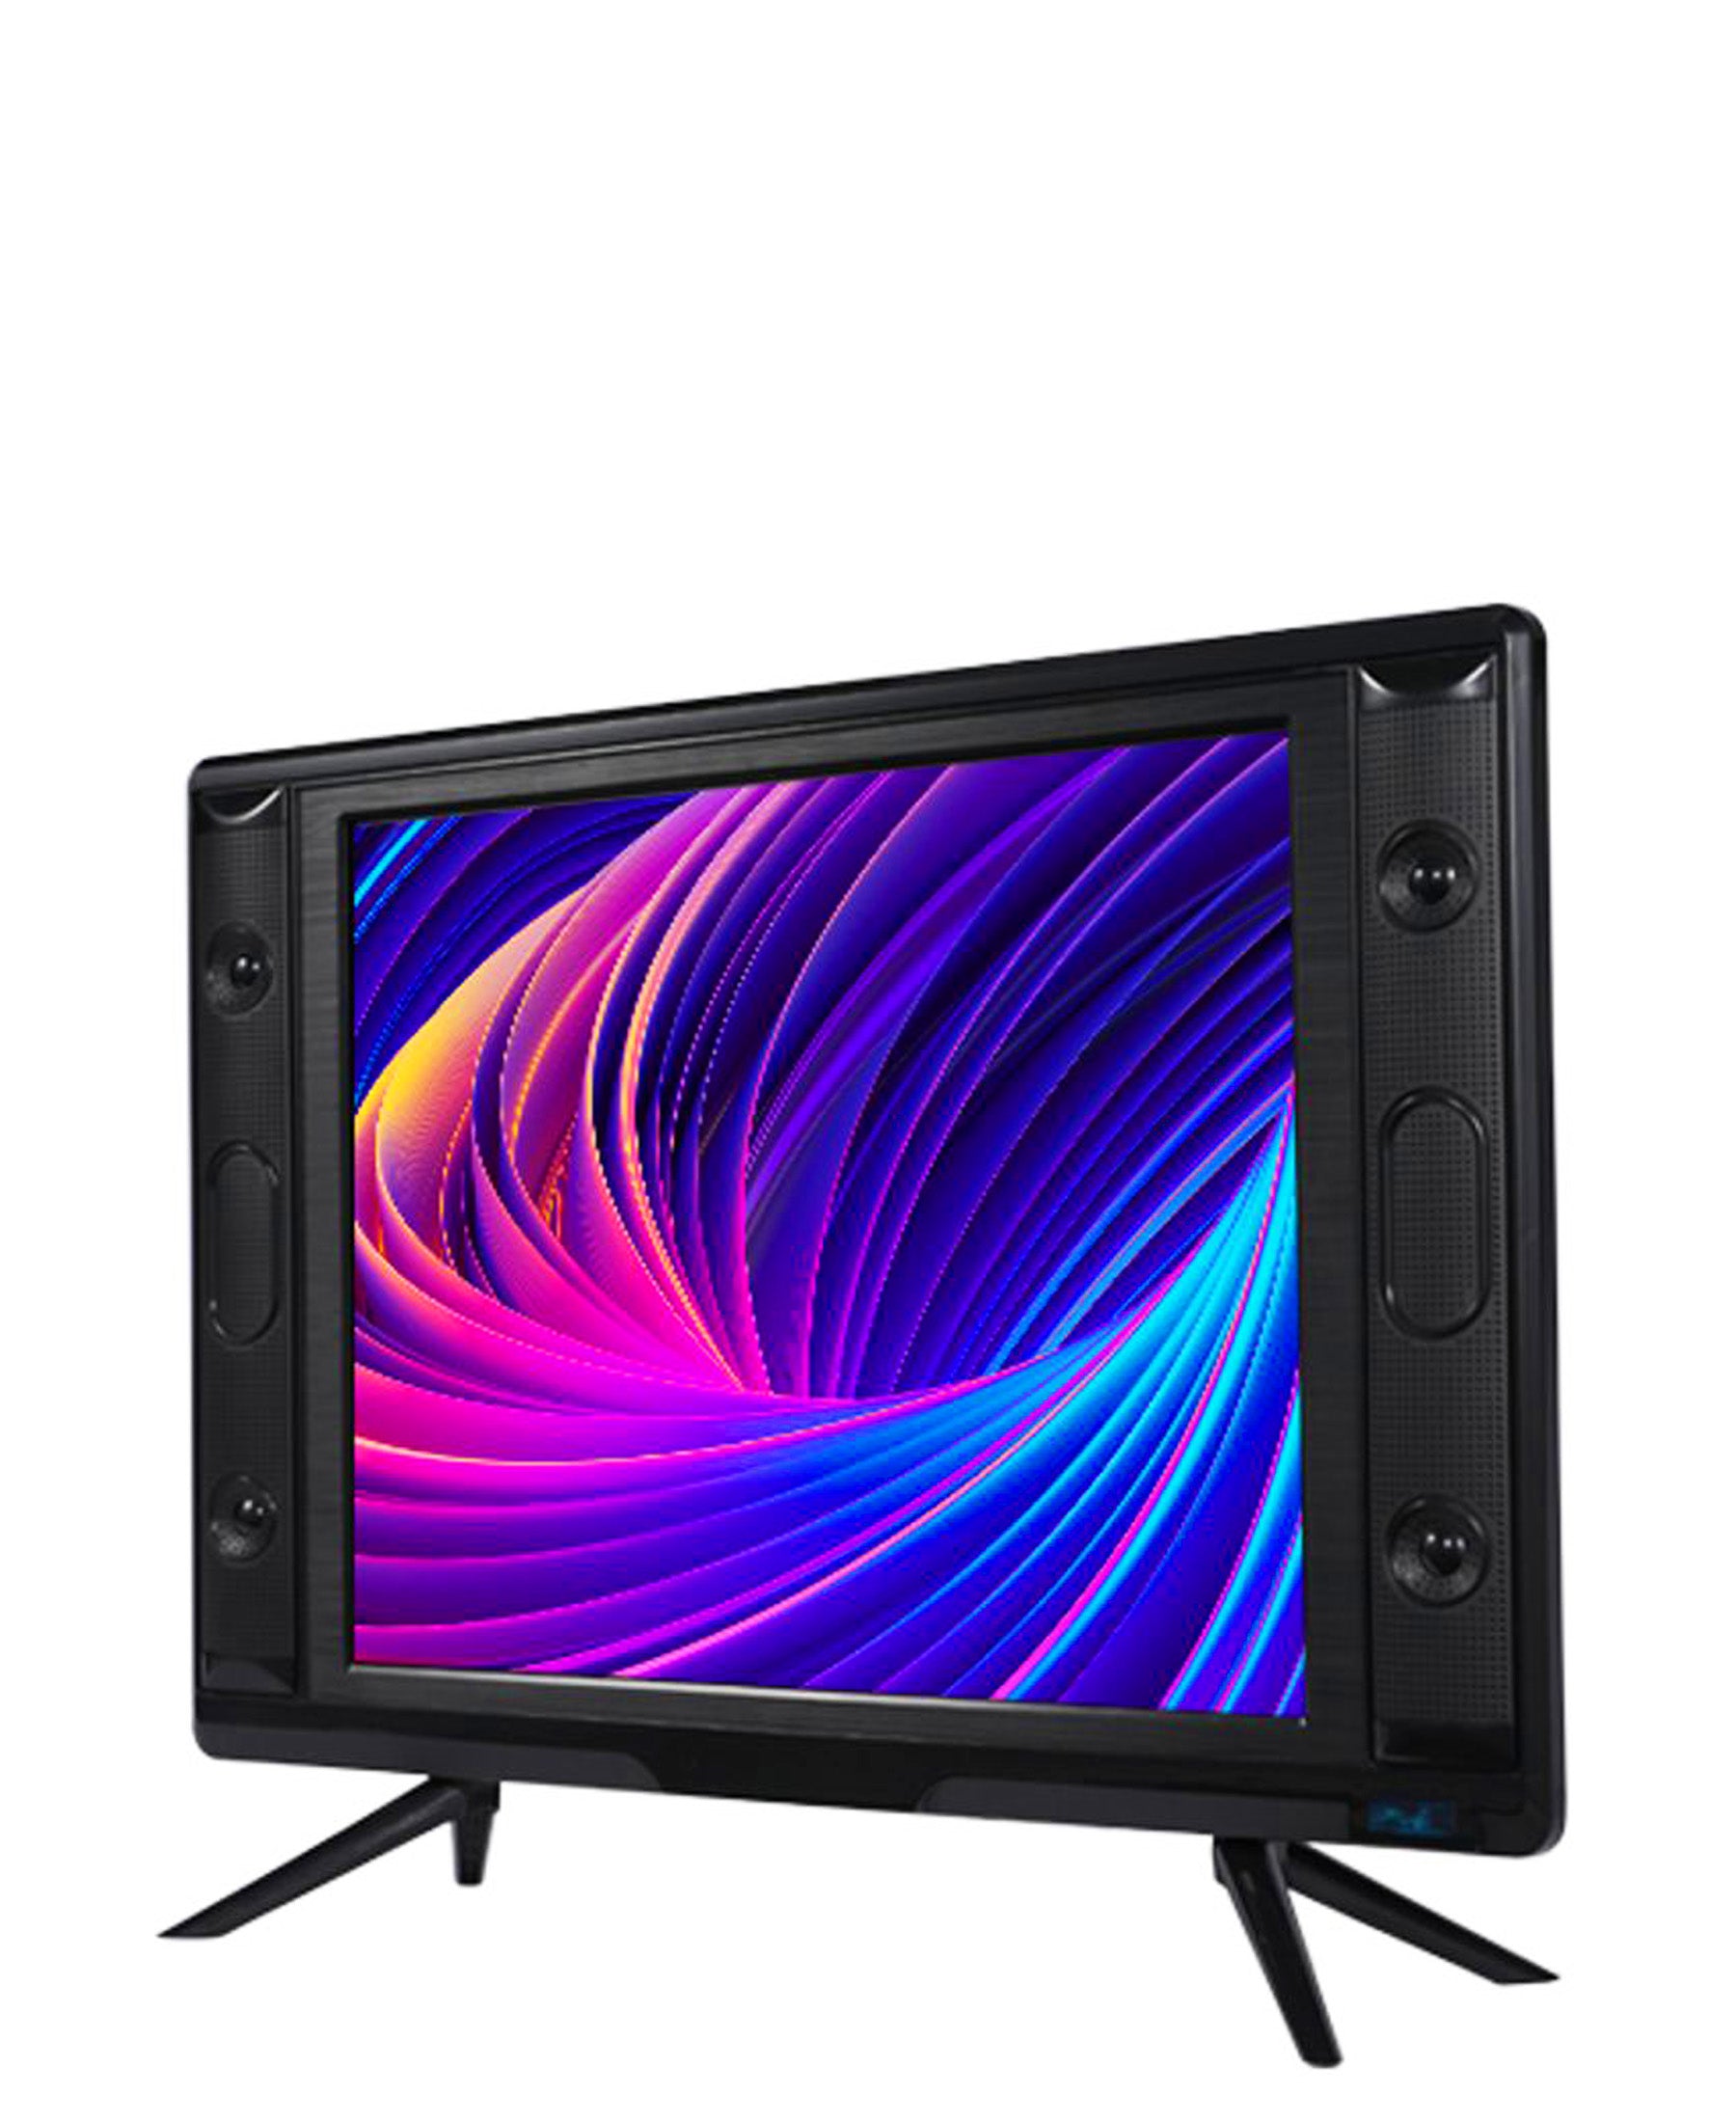 Itel HD 17" LED TV - Black